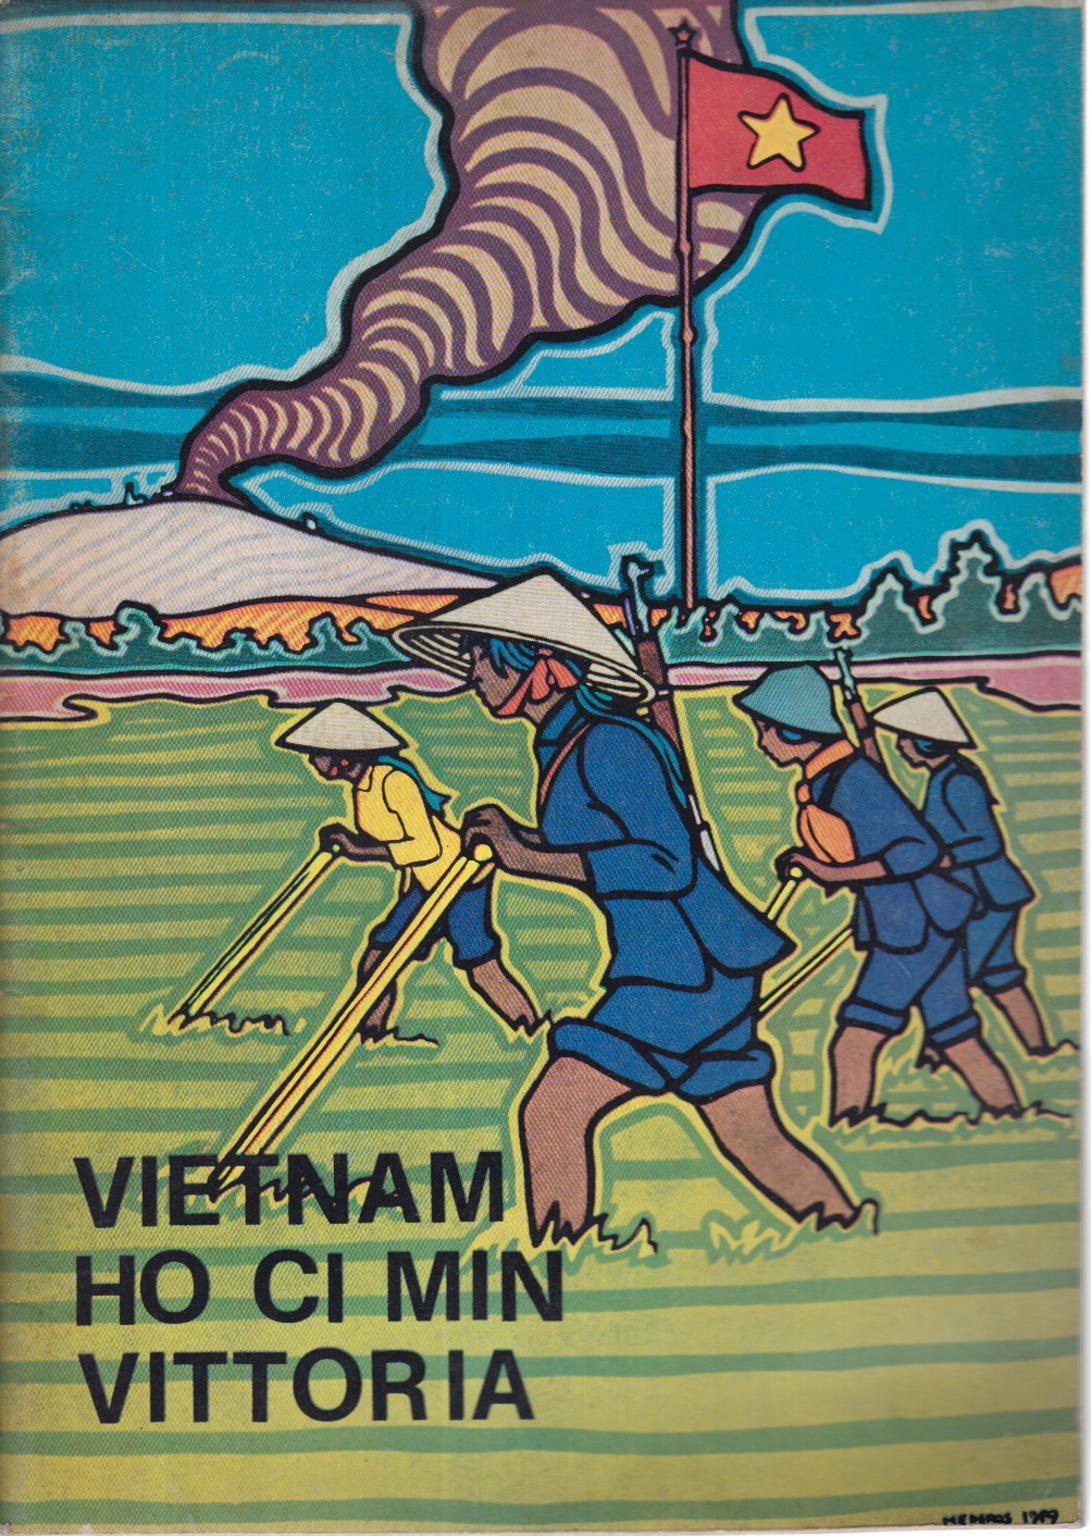 Vietnam, yo No Min de la victoria, s.una.